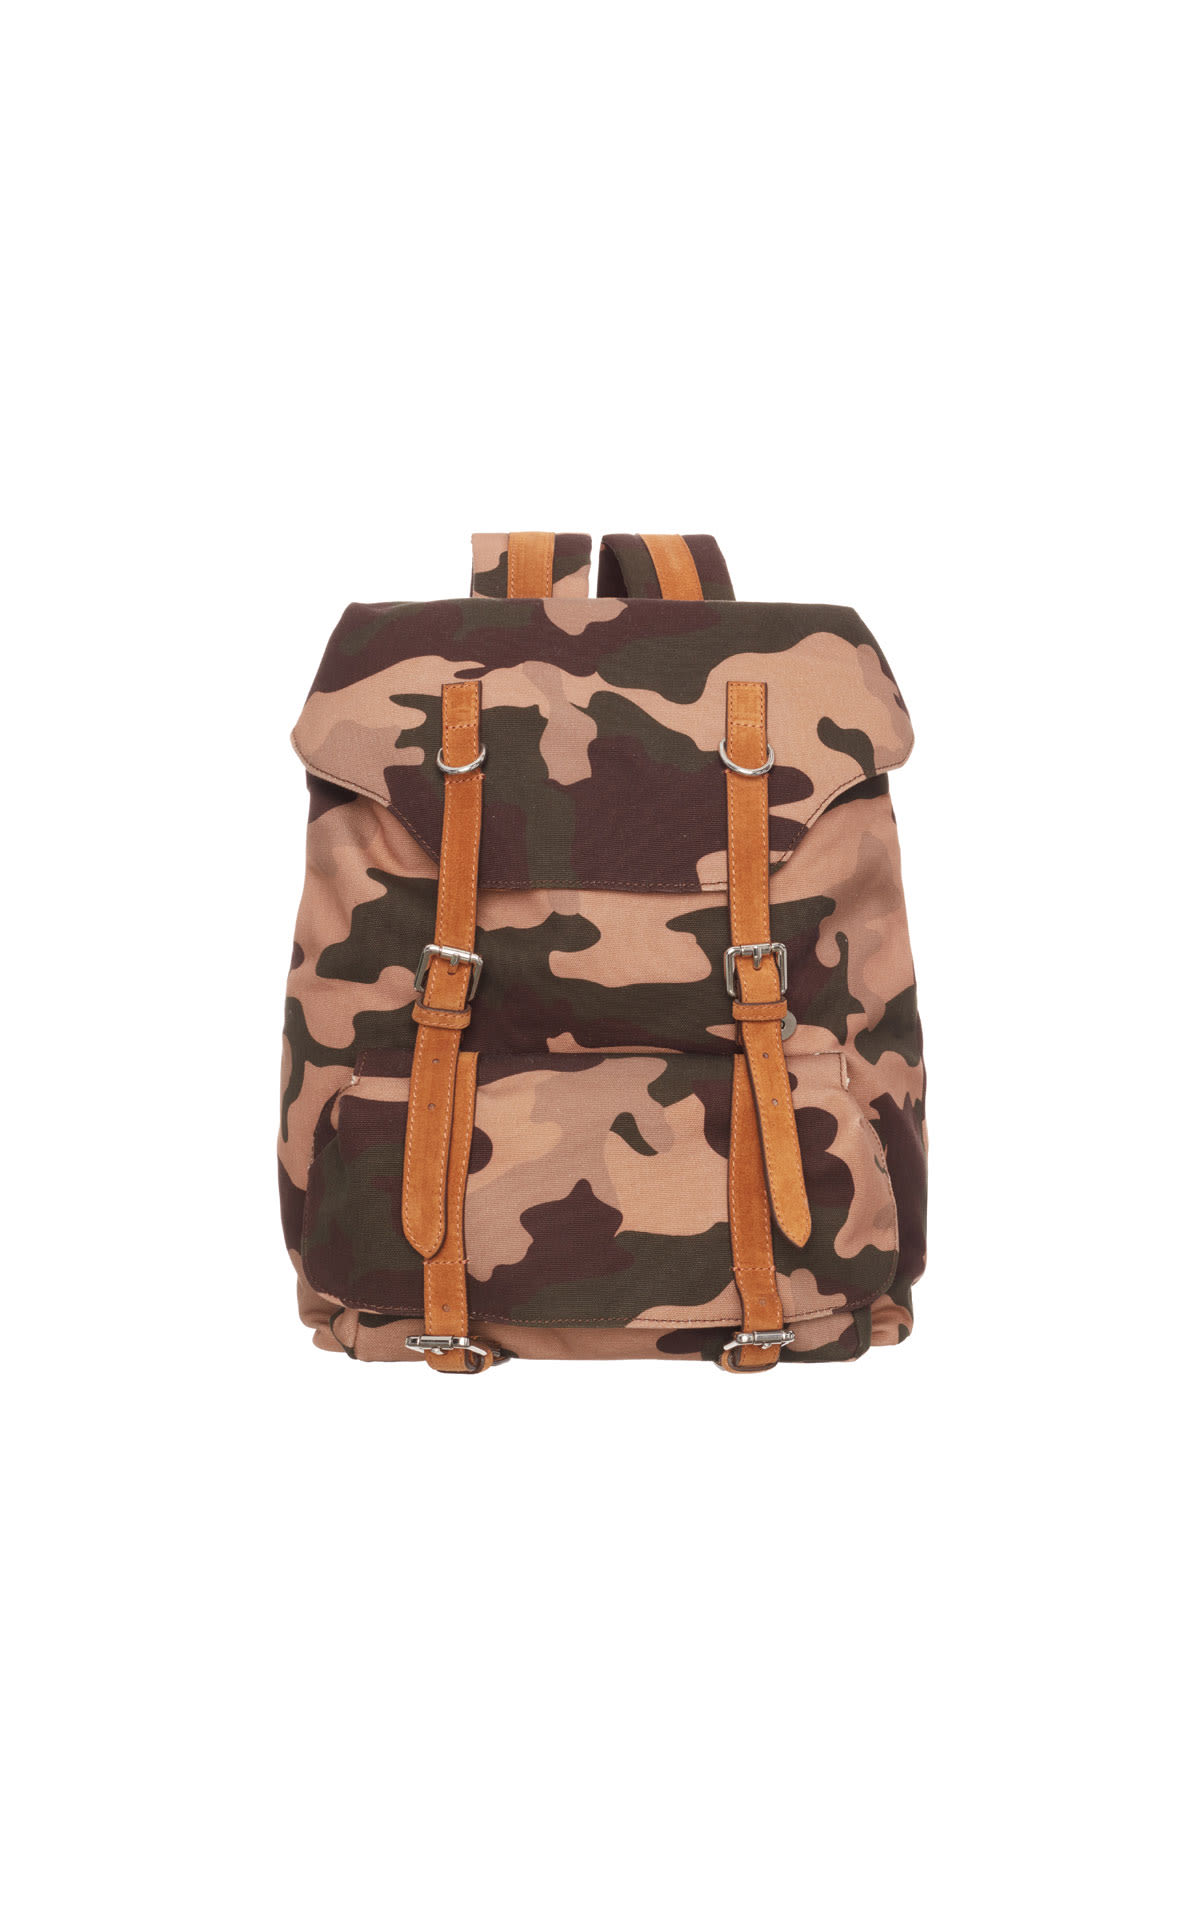 Eleventy Camouflage backpack from Bicester Village